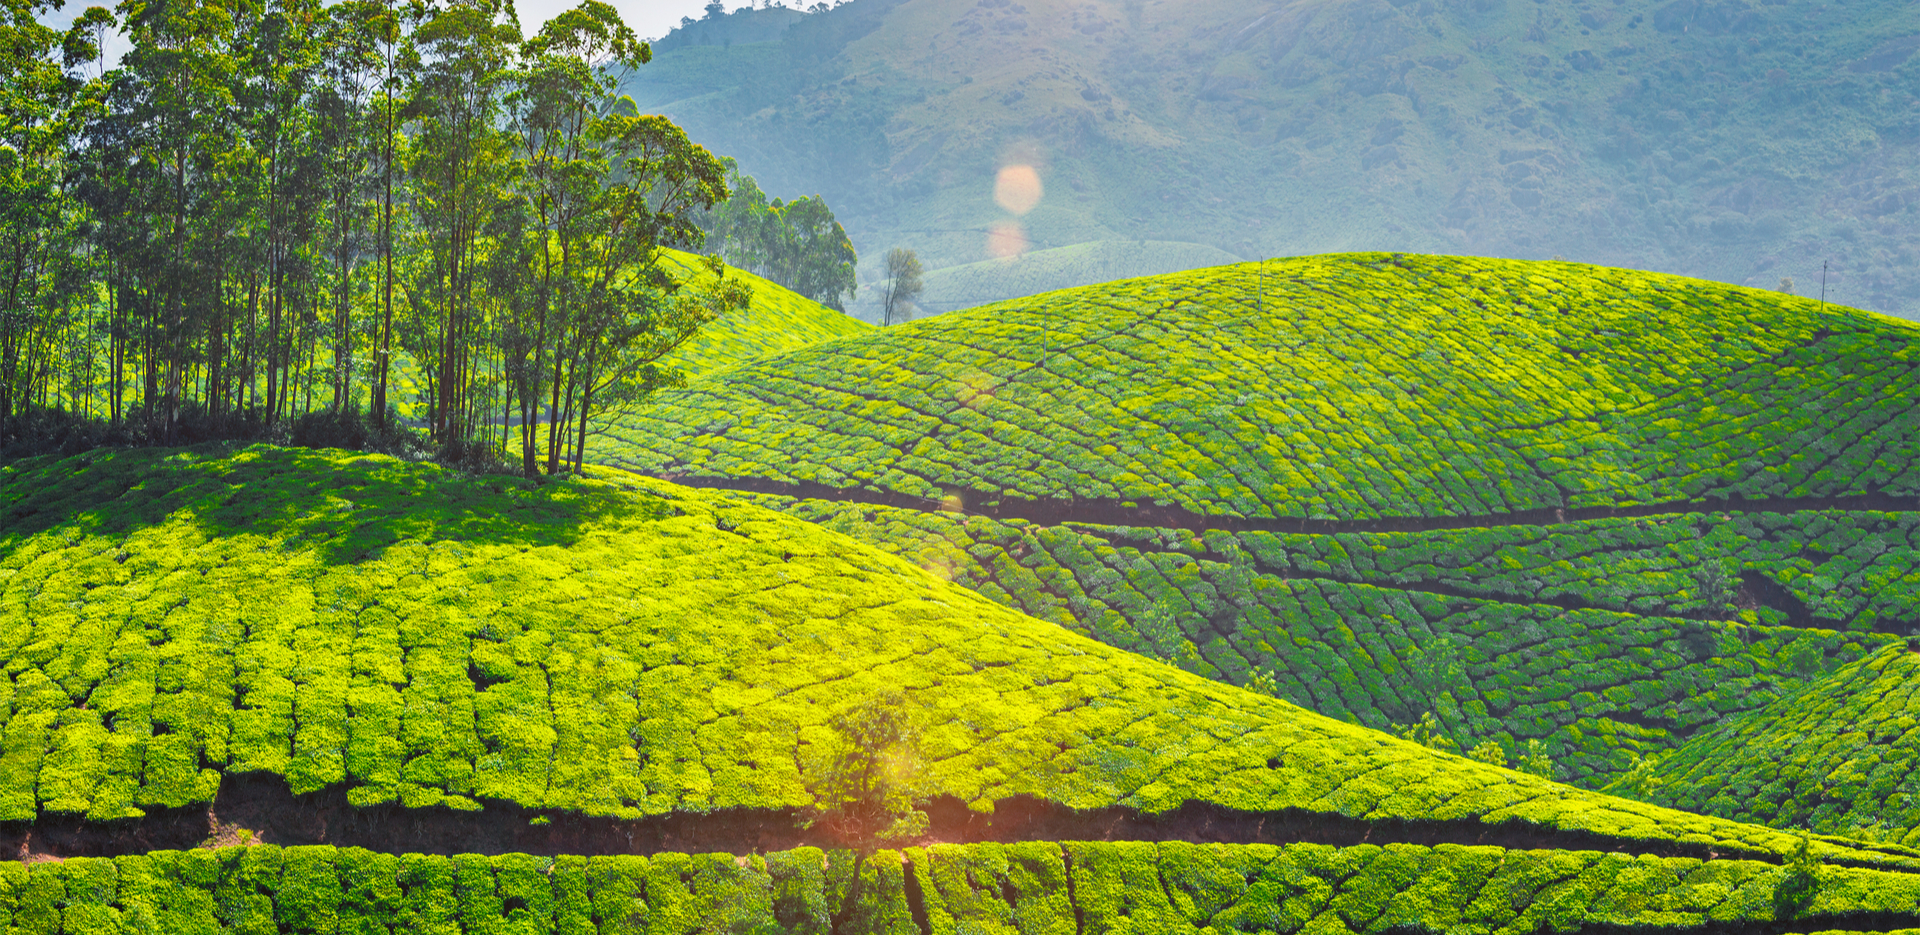 Munnar tea gardens